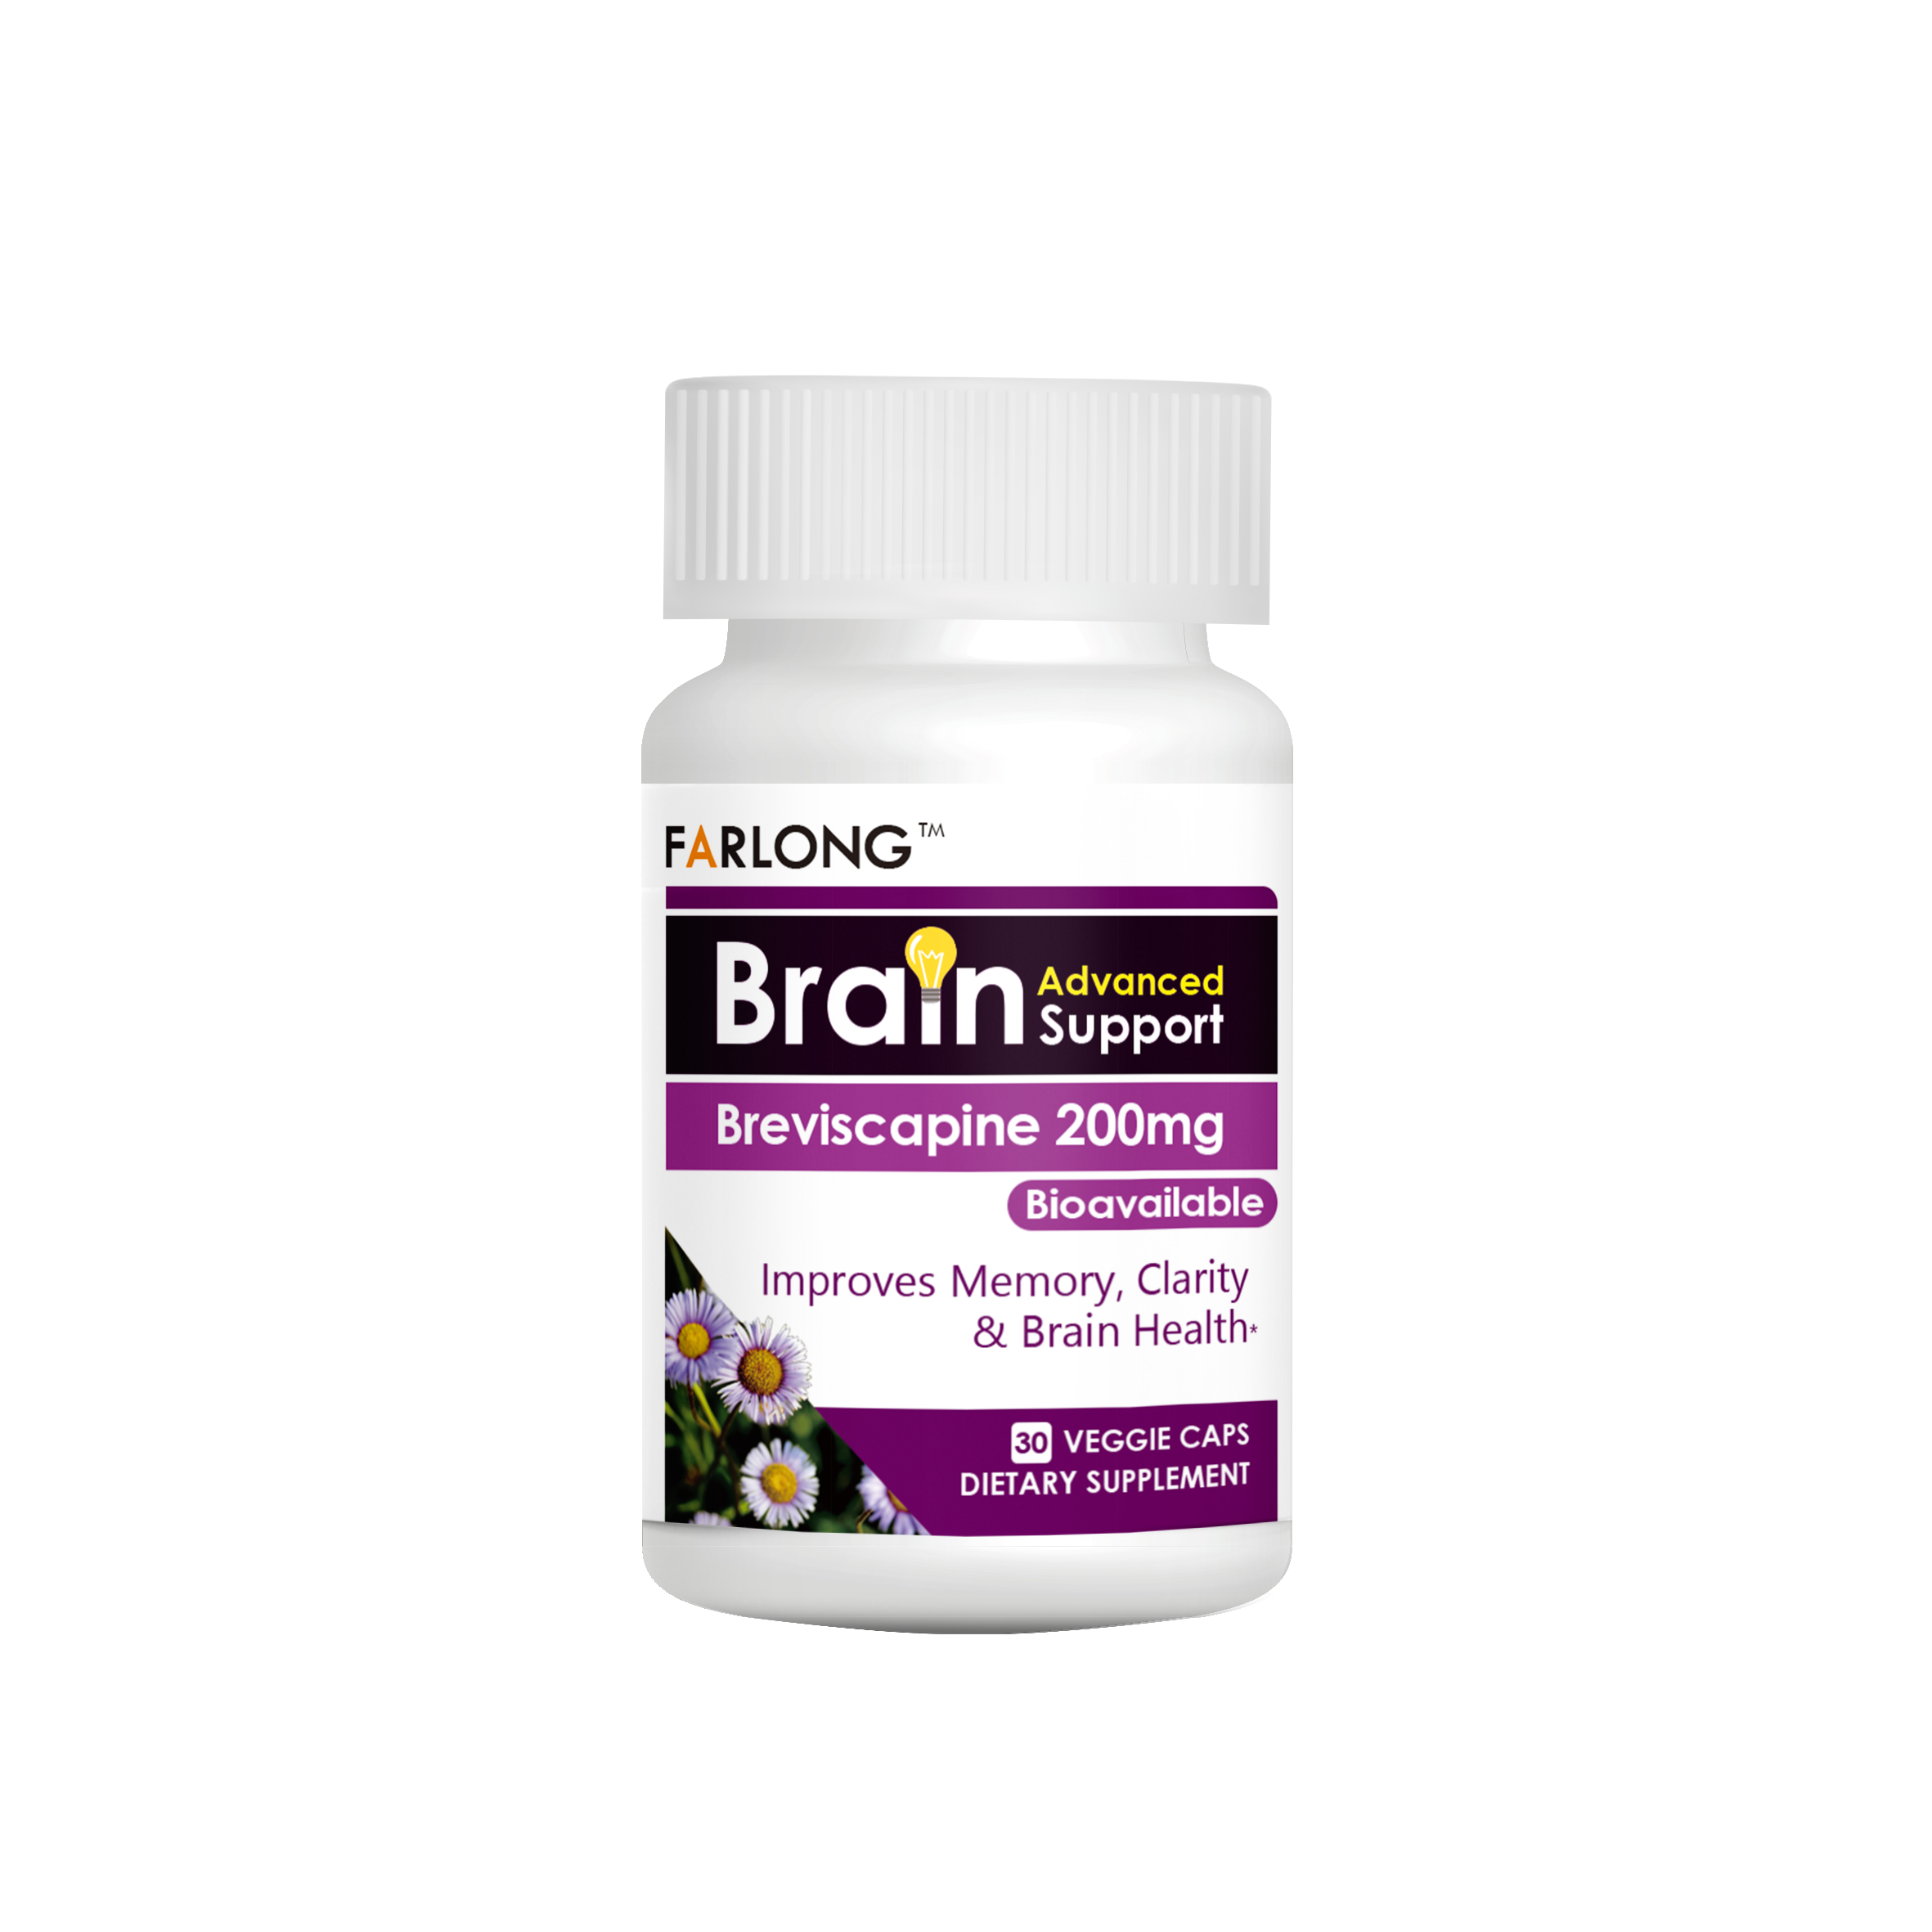 Farlong Pharmaceutical’s Brain Advanced Support